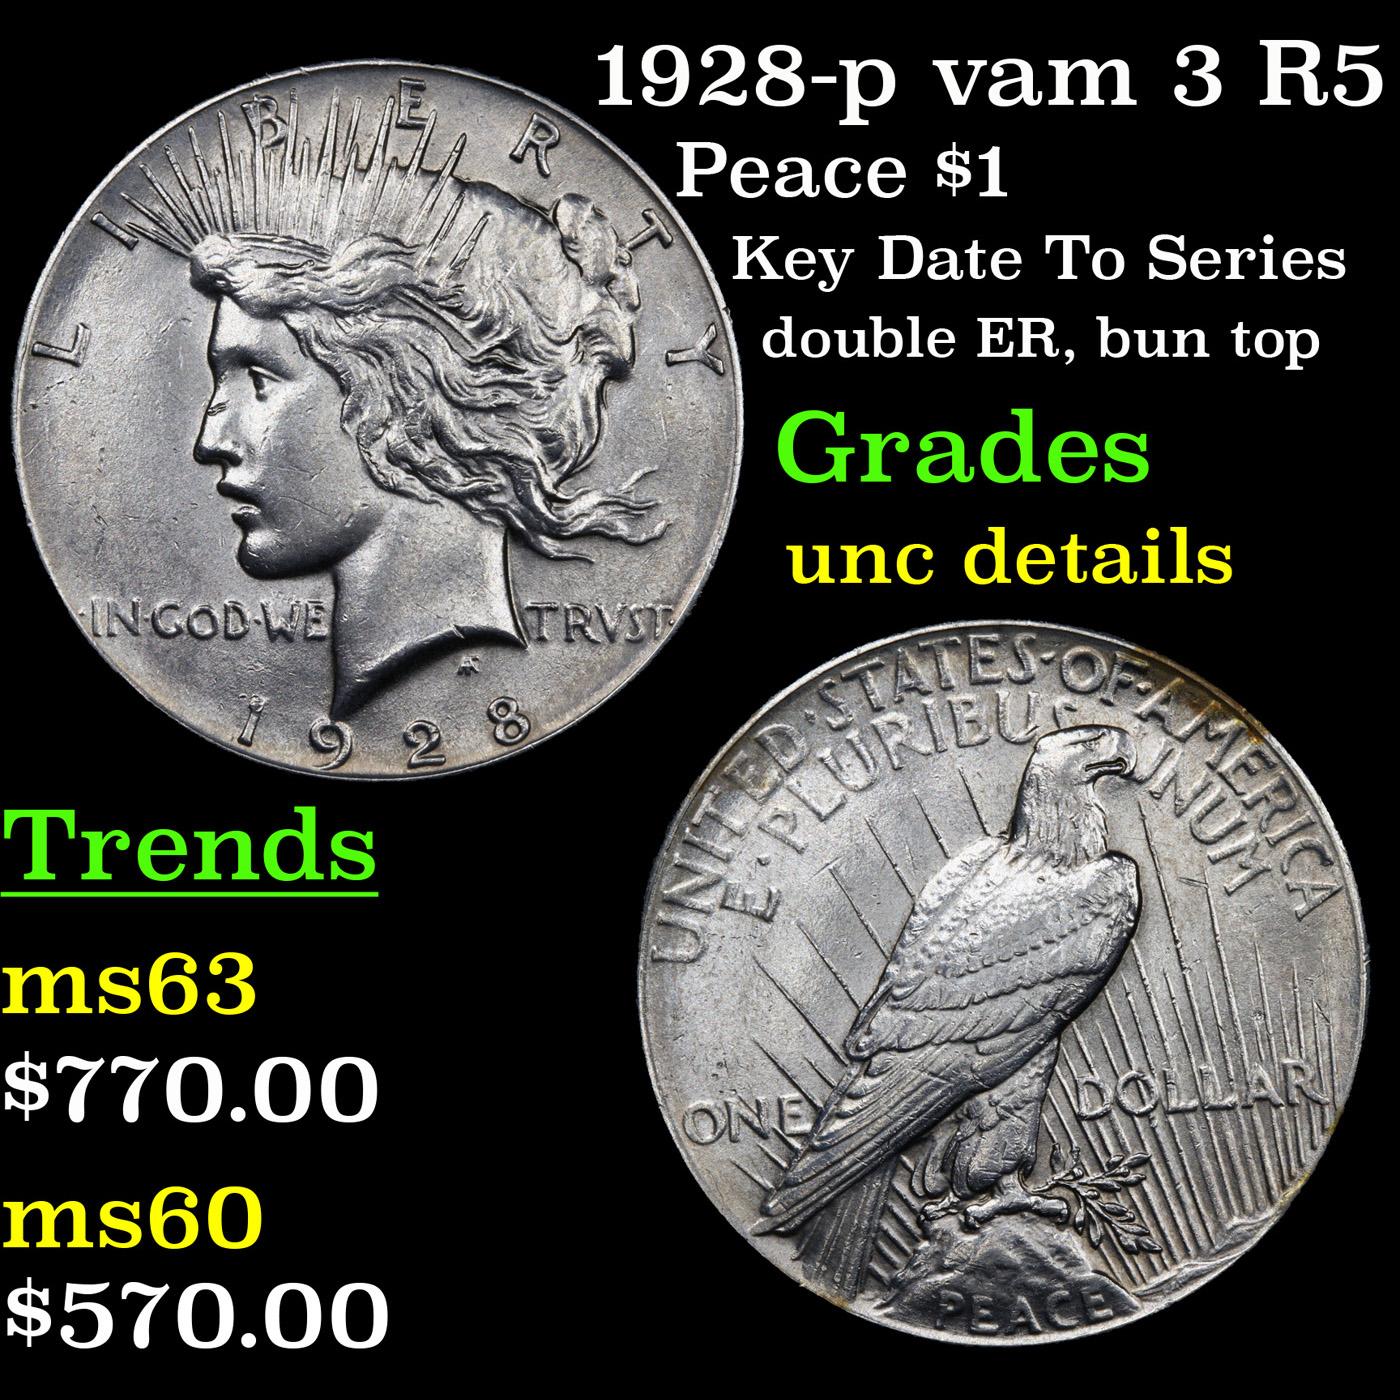 1928-p vam 3 R5 Peace Dollar $1 Grades Unc Details